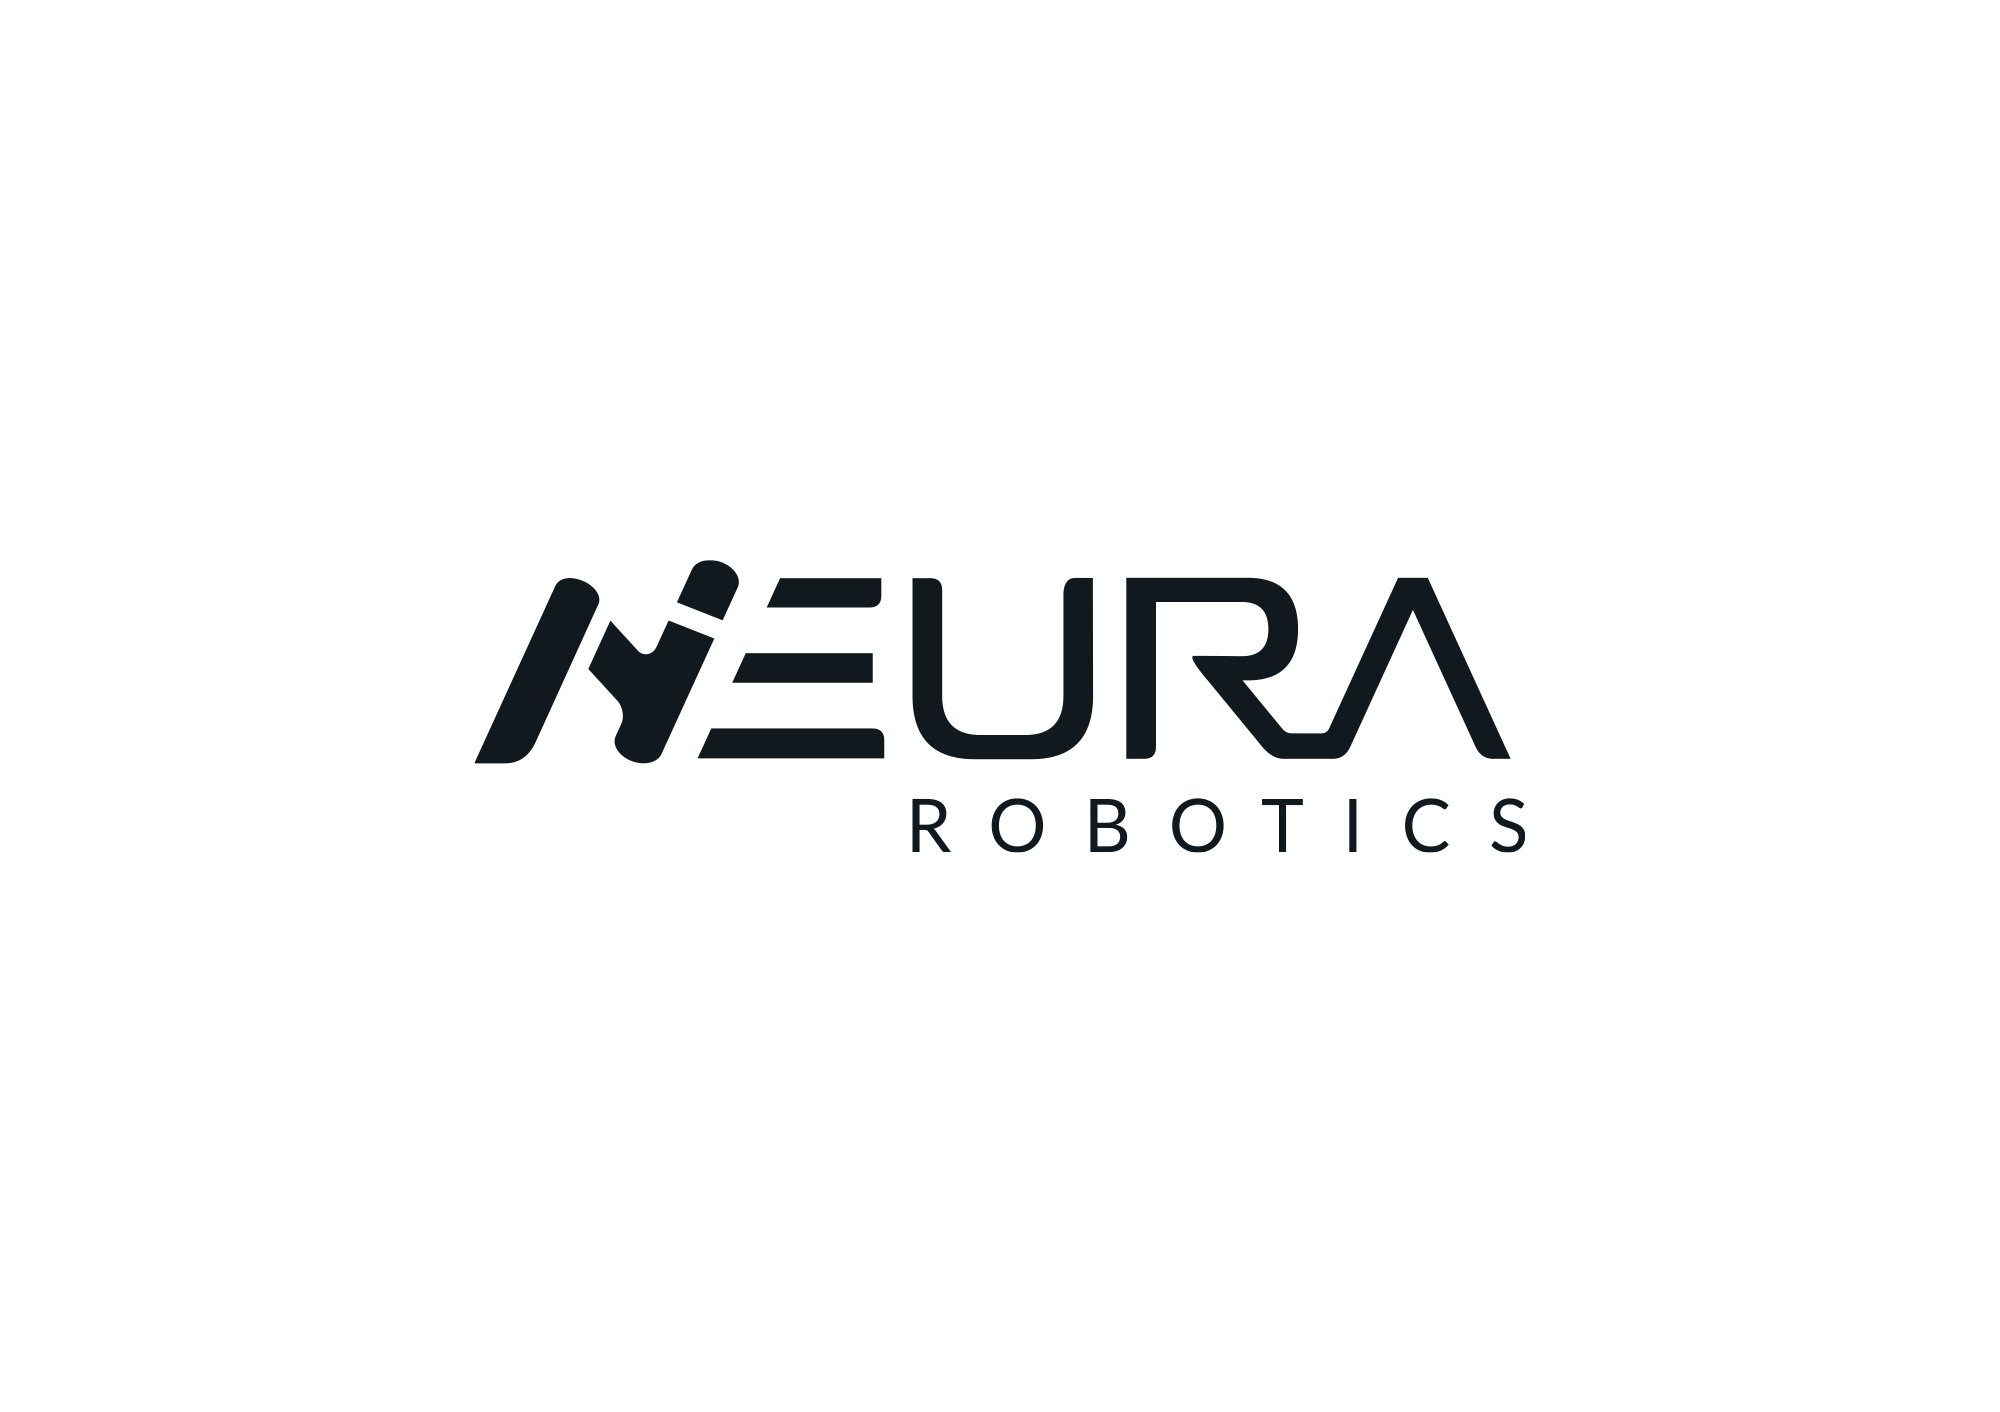 (c) Neura-robotics.com